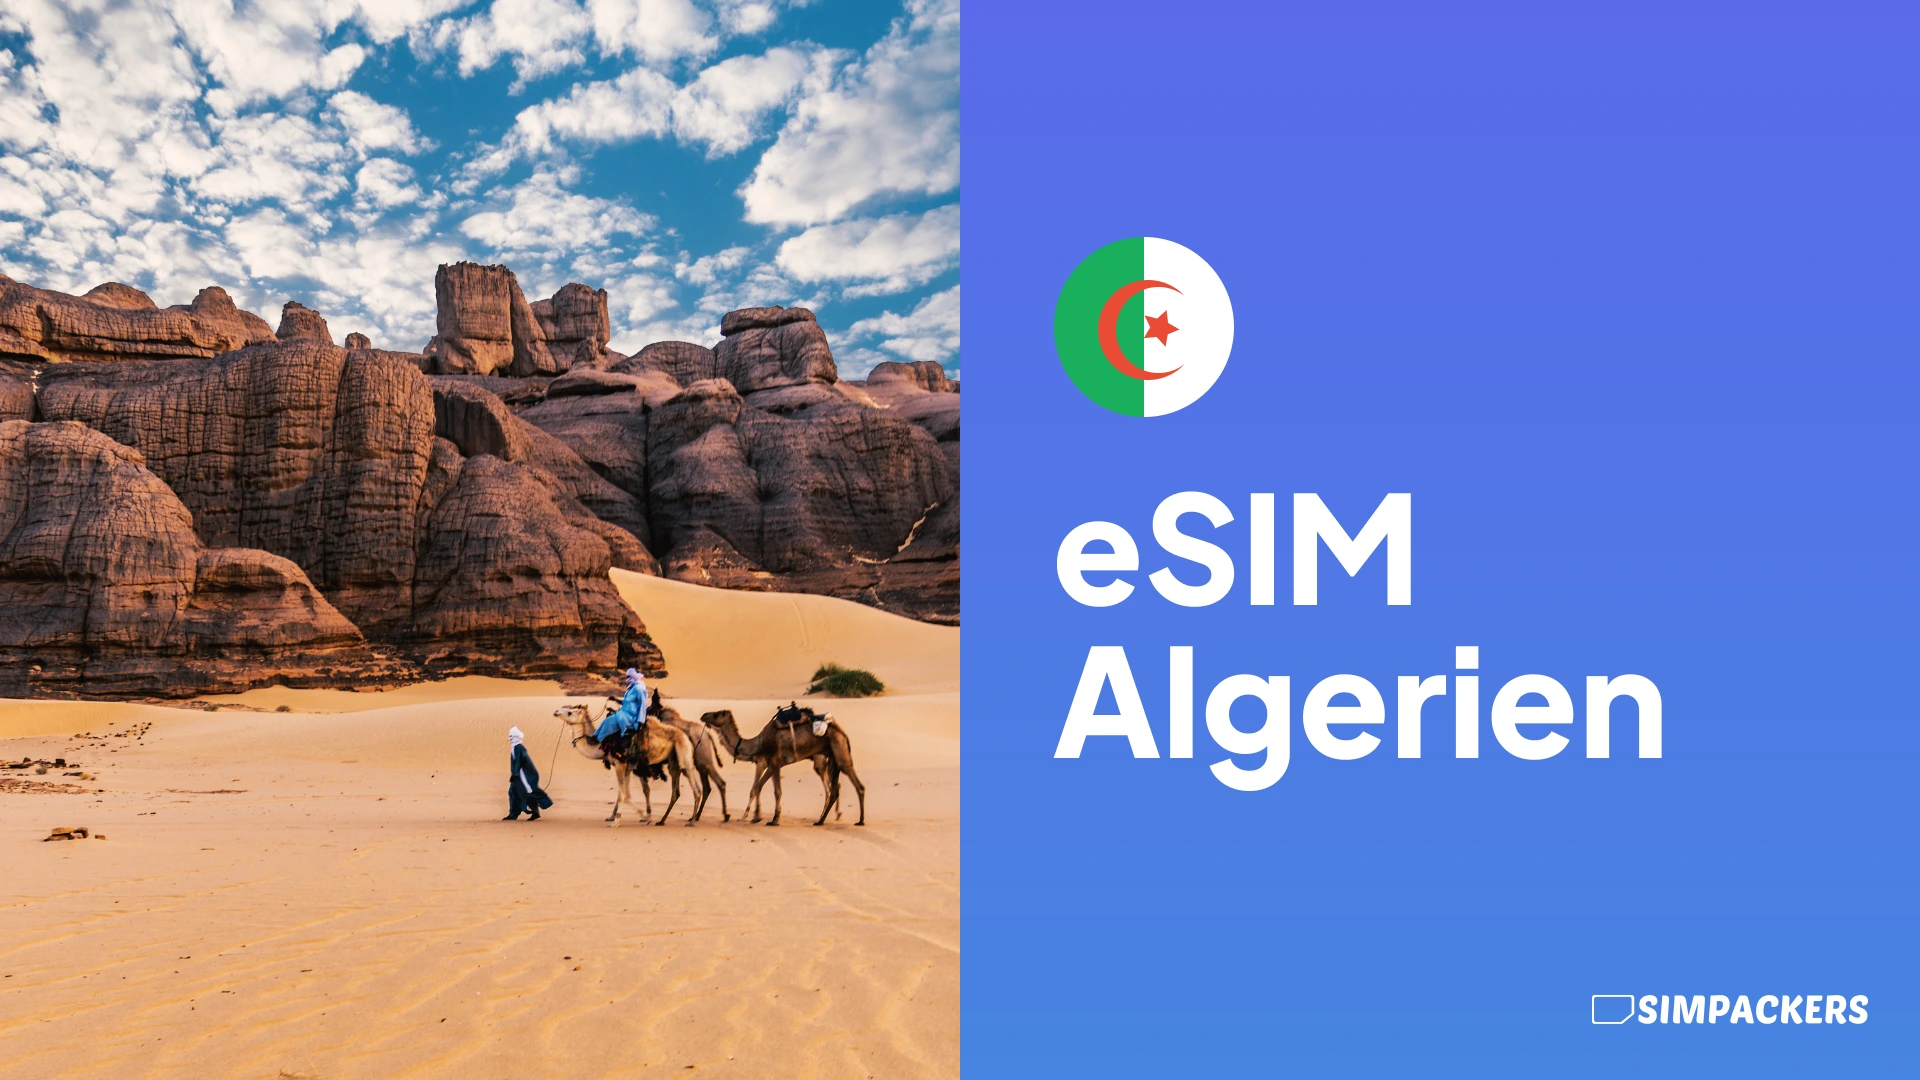 DE/FEATURED_IMAGES/esim-algerien.webp